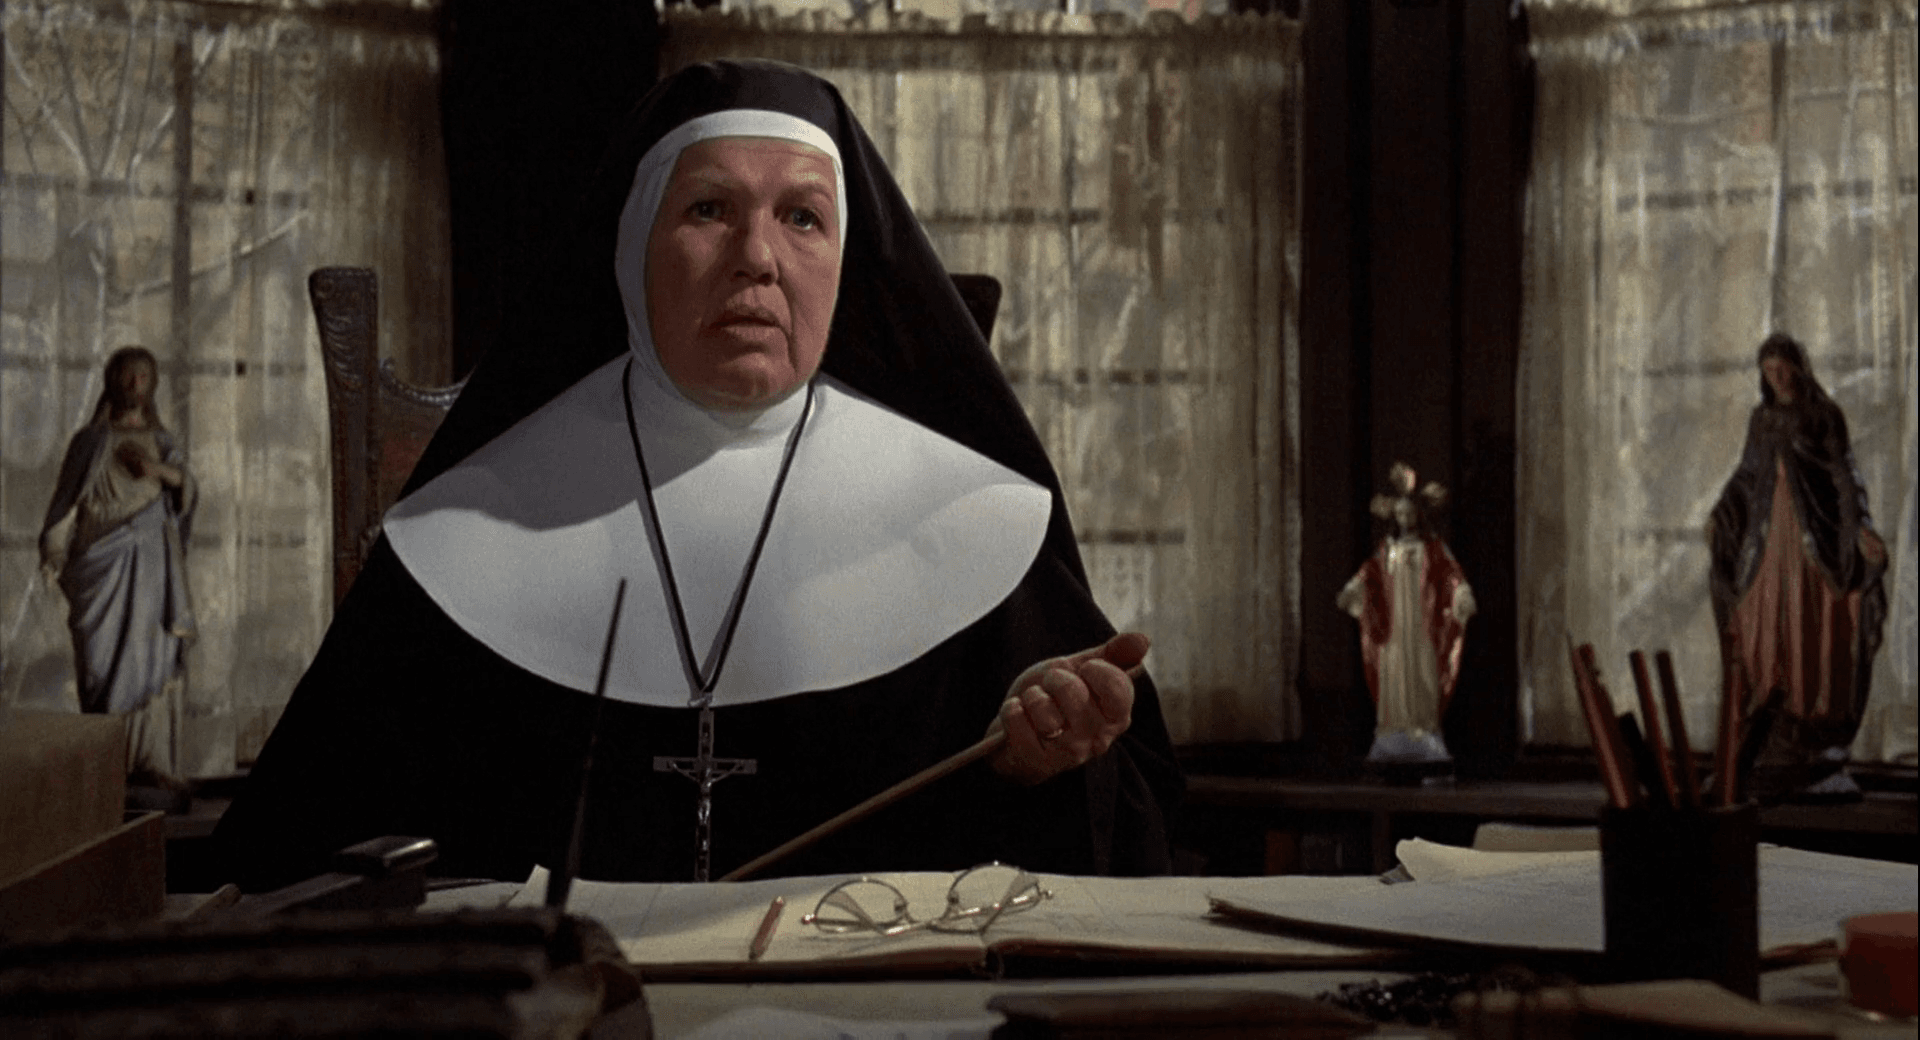 Sister Mary Stigmata with Ruler